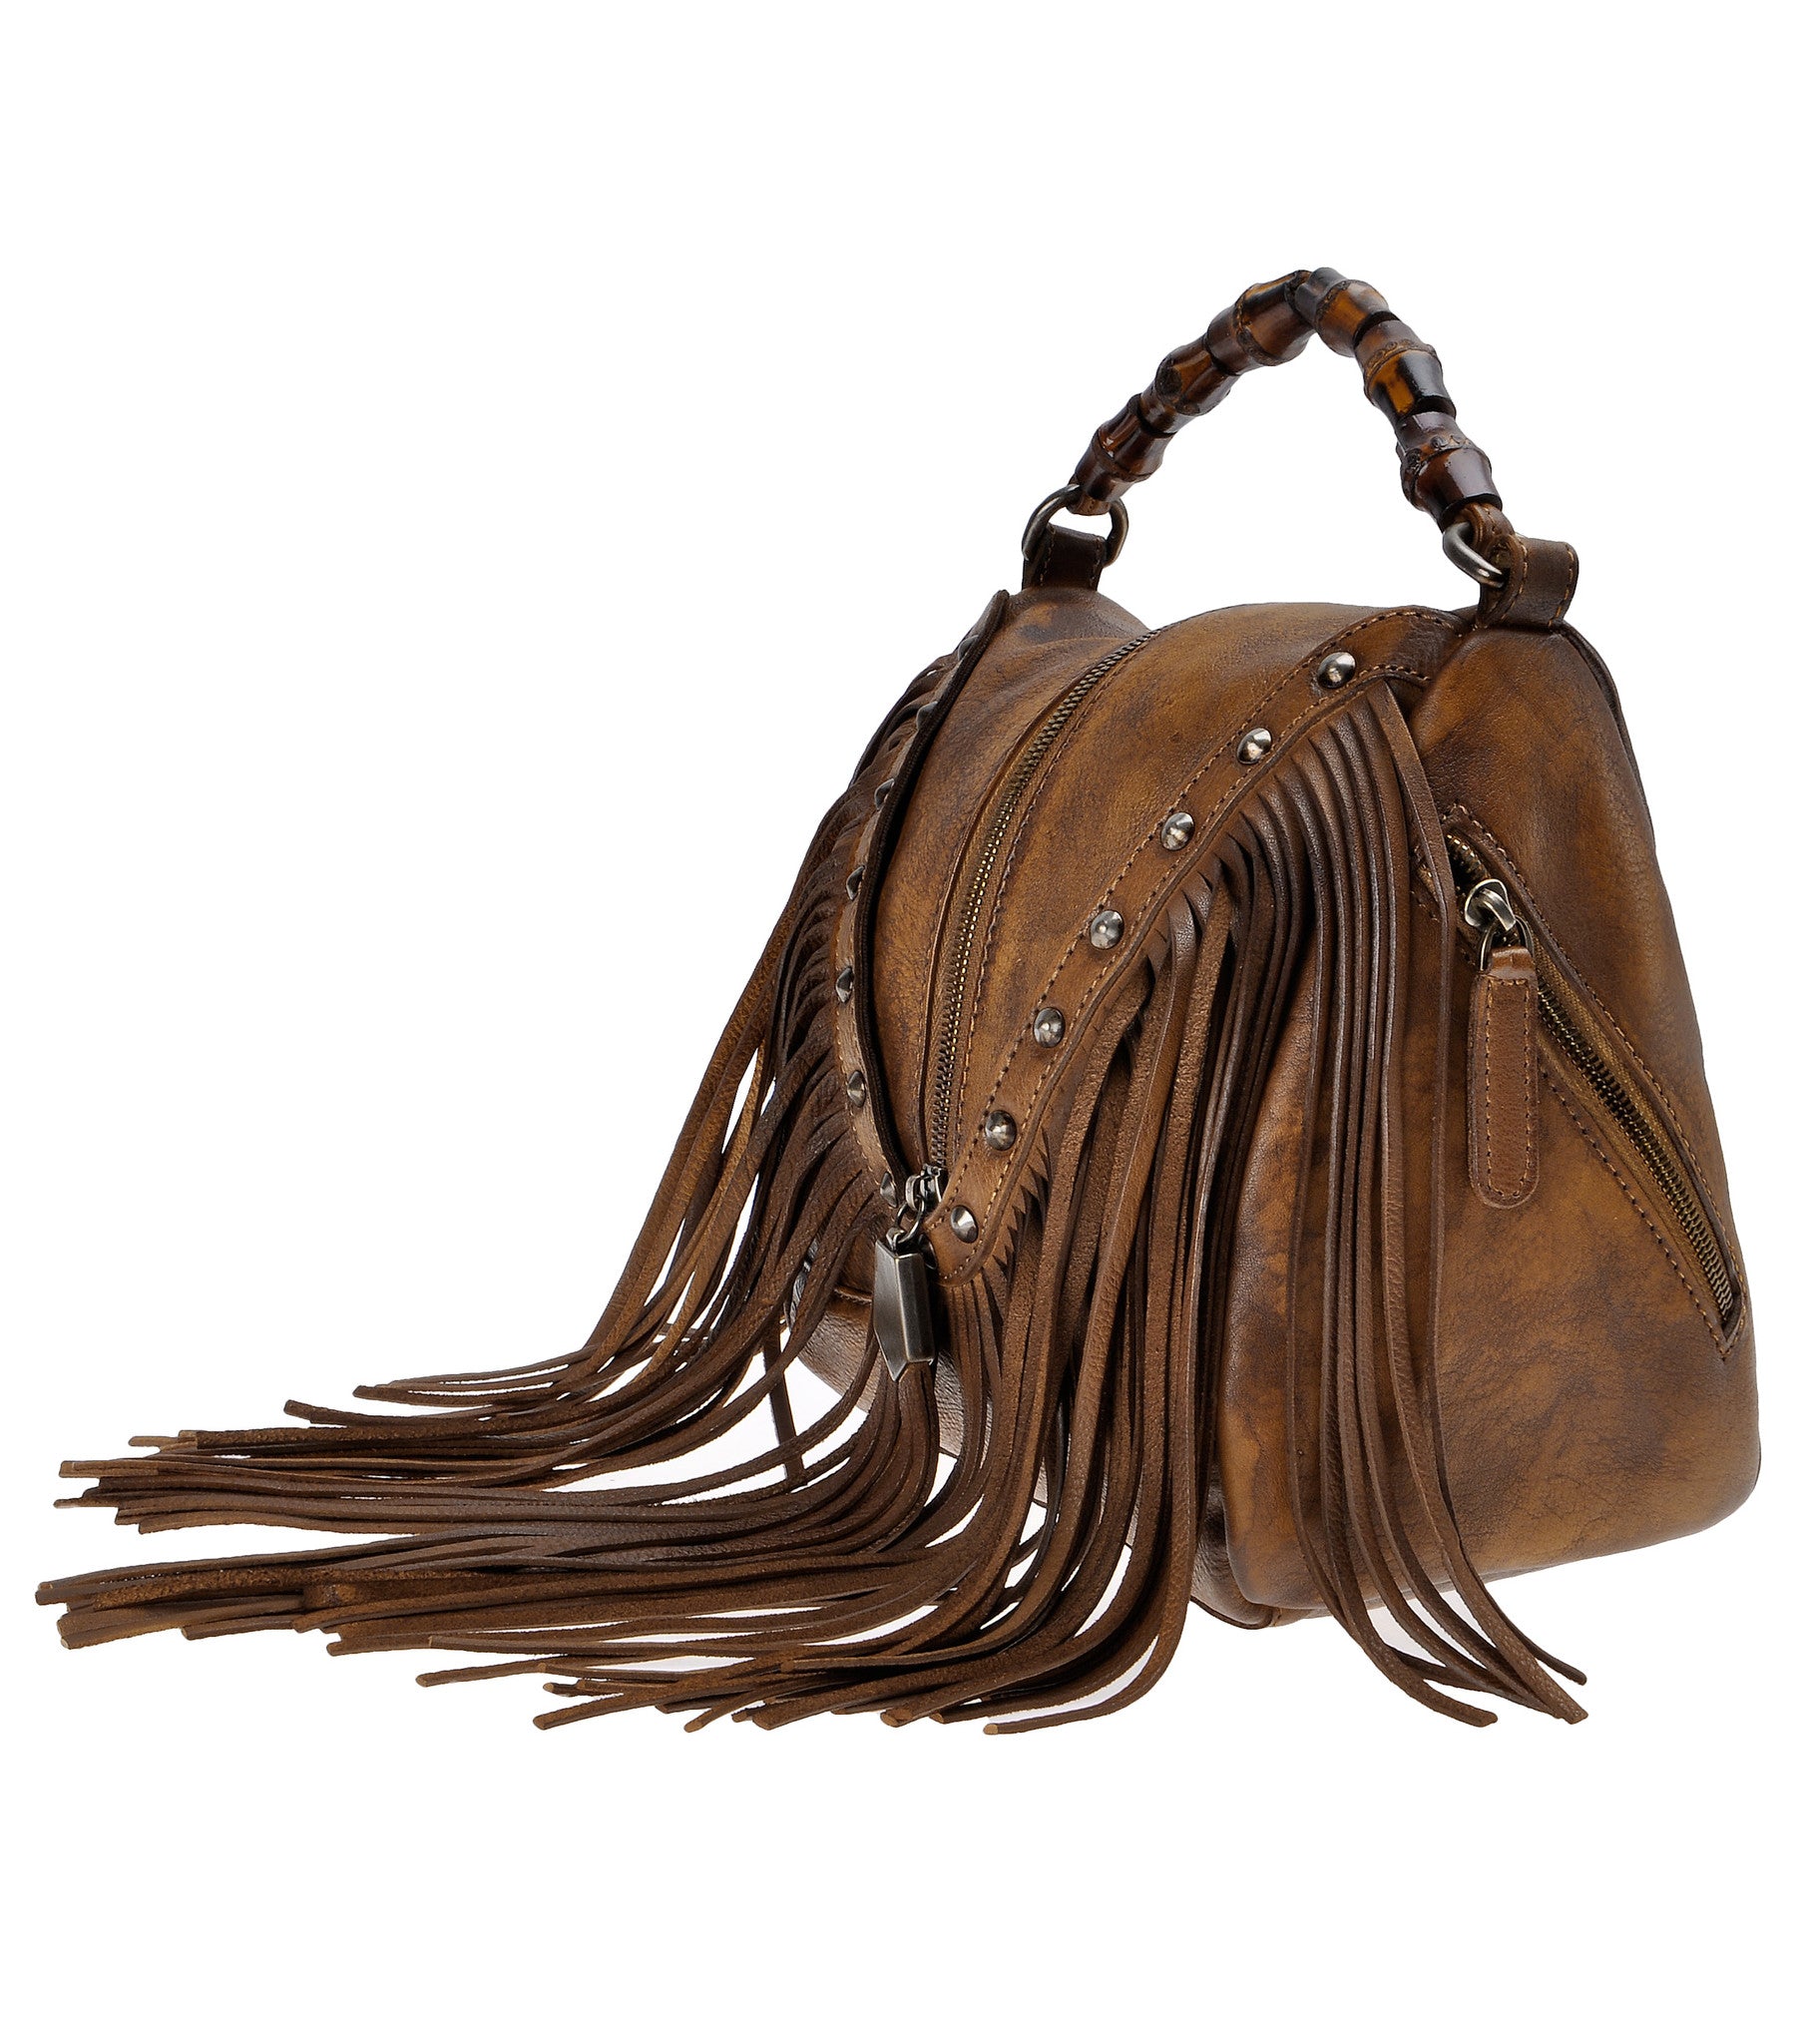 For sale! Bag is real leather and the tassels are real leather. # louisvuitton #louisvuittonrepurposed #tassel #tasselhandbag